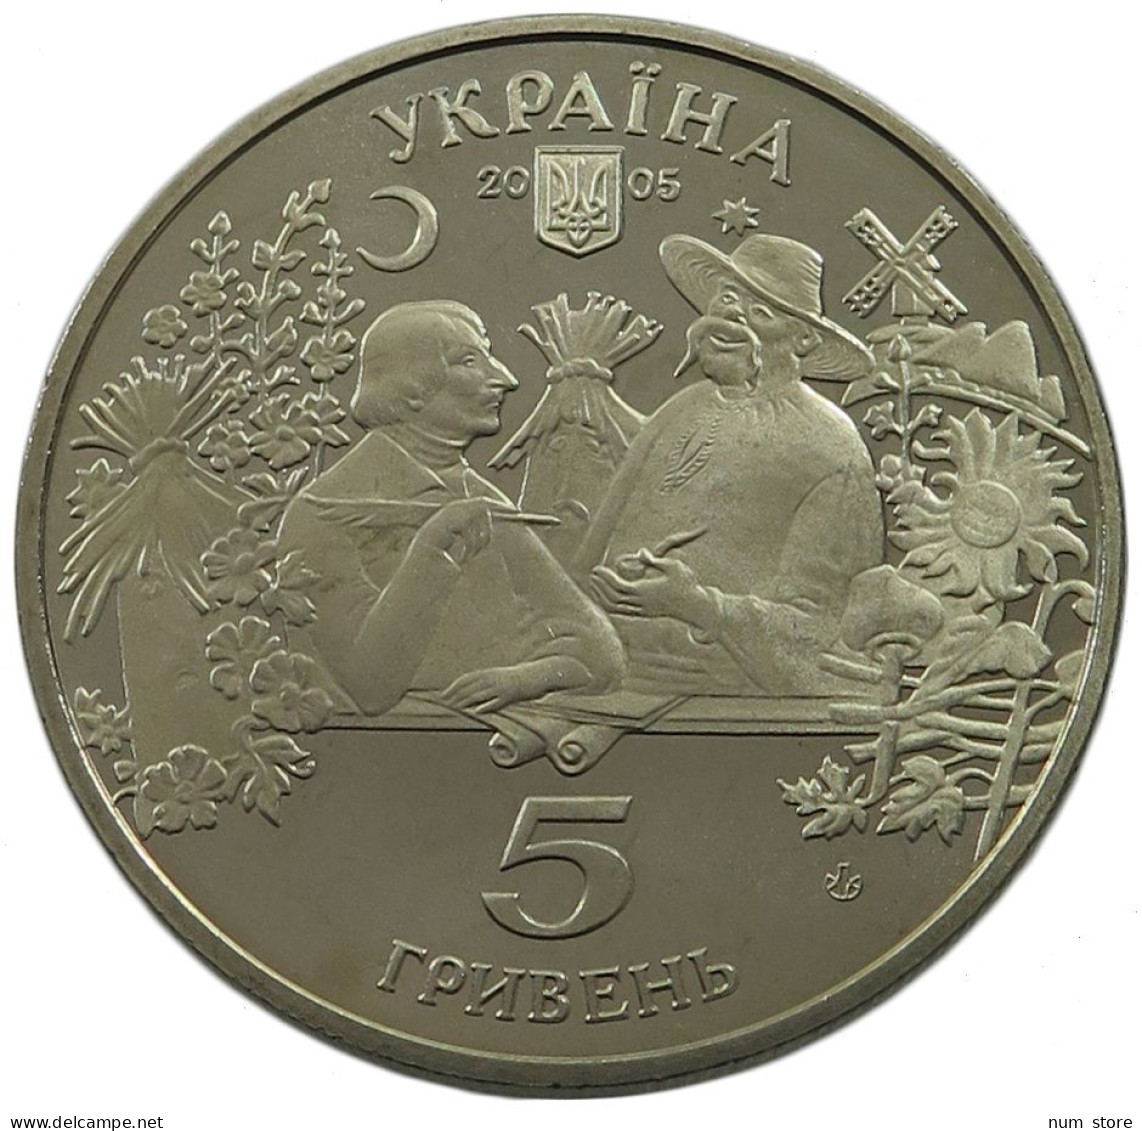 UKRAINE 5 HRYVEN 2005  #w032 0551 - Ukraine